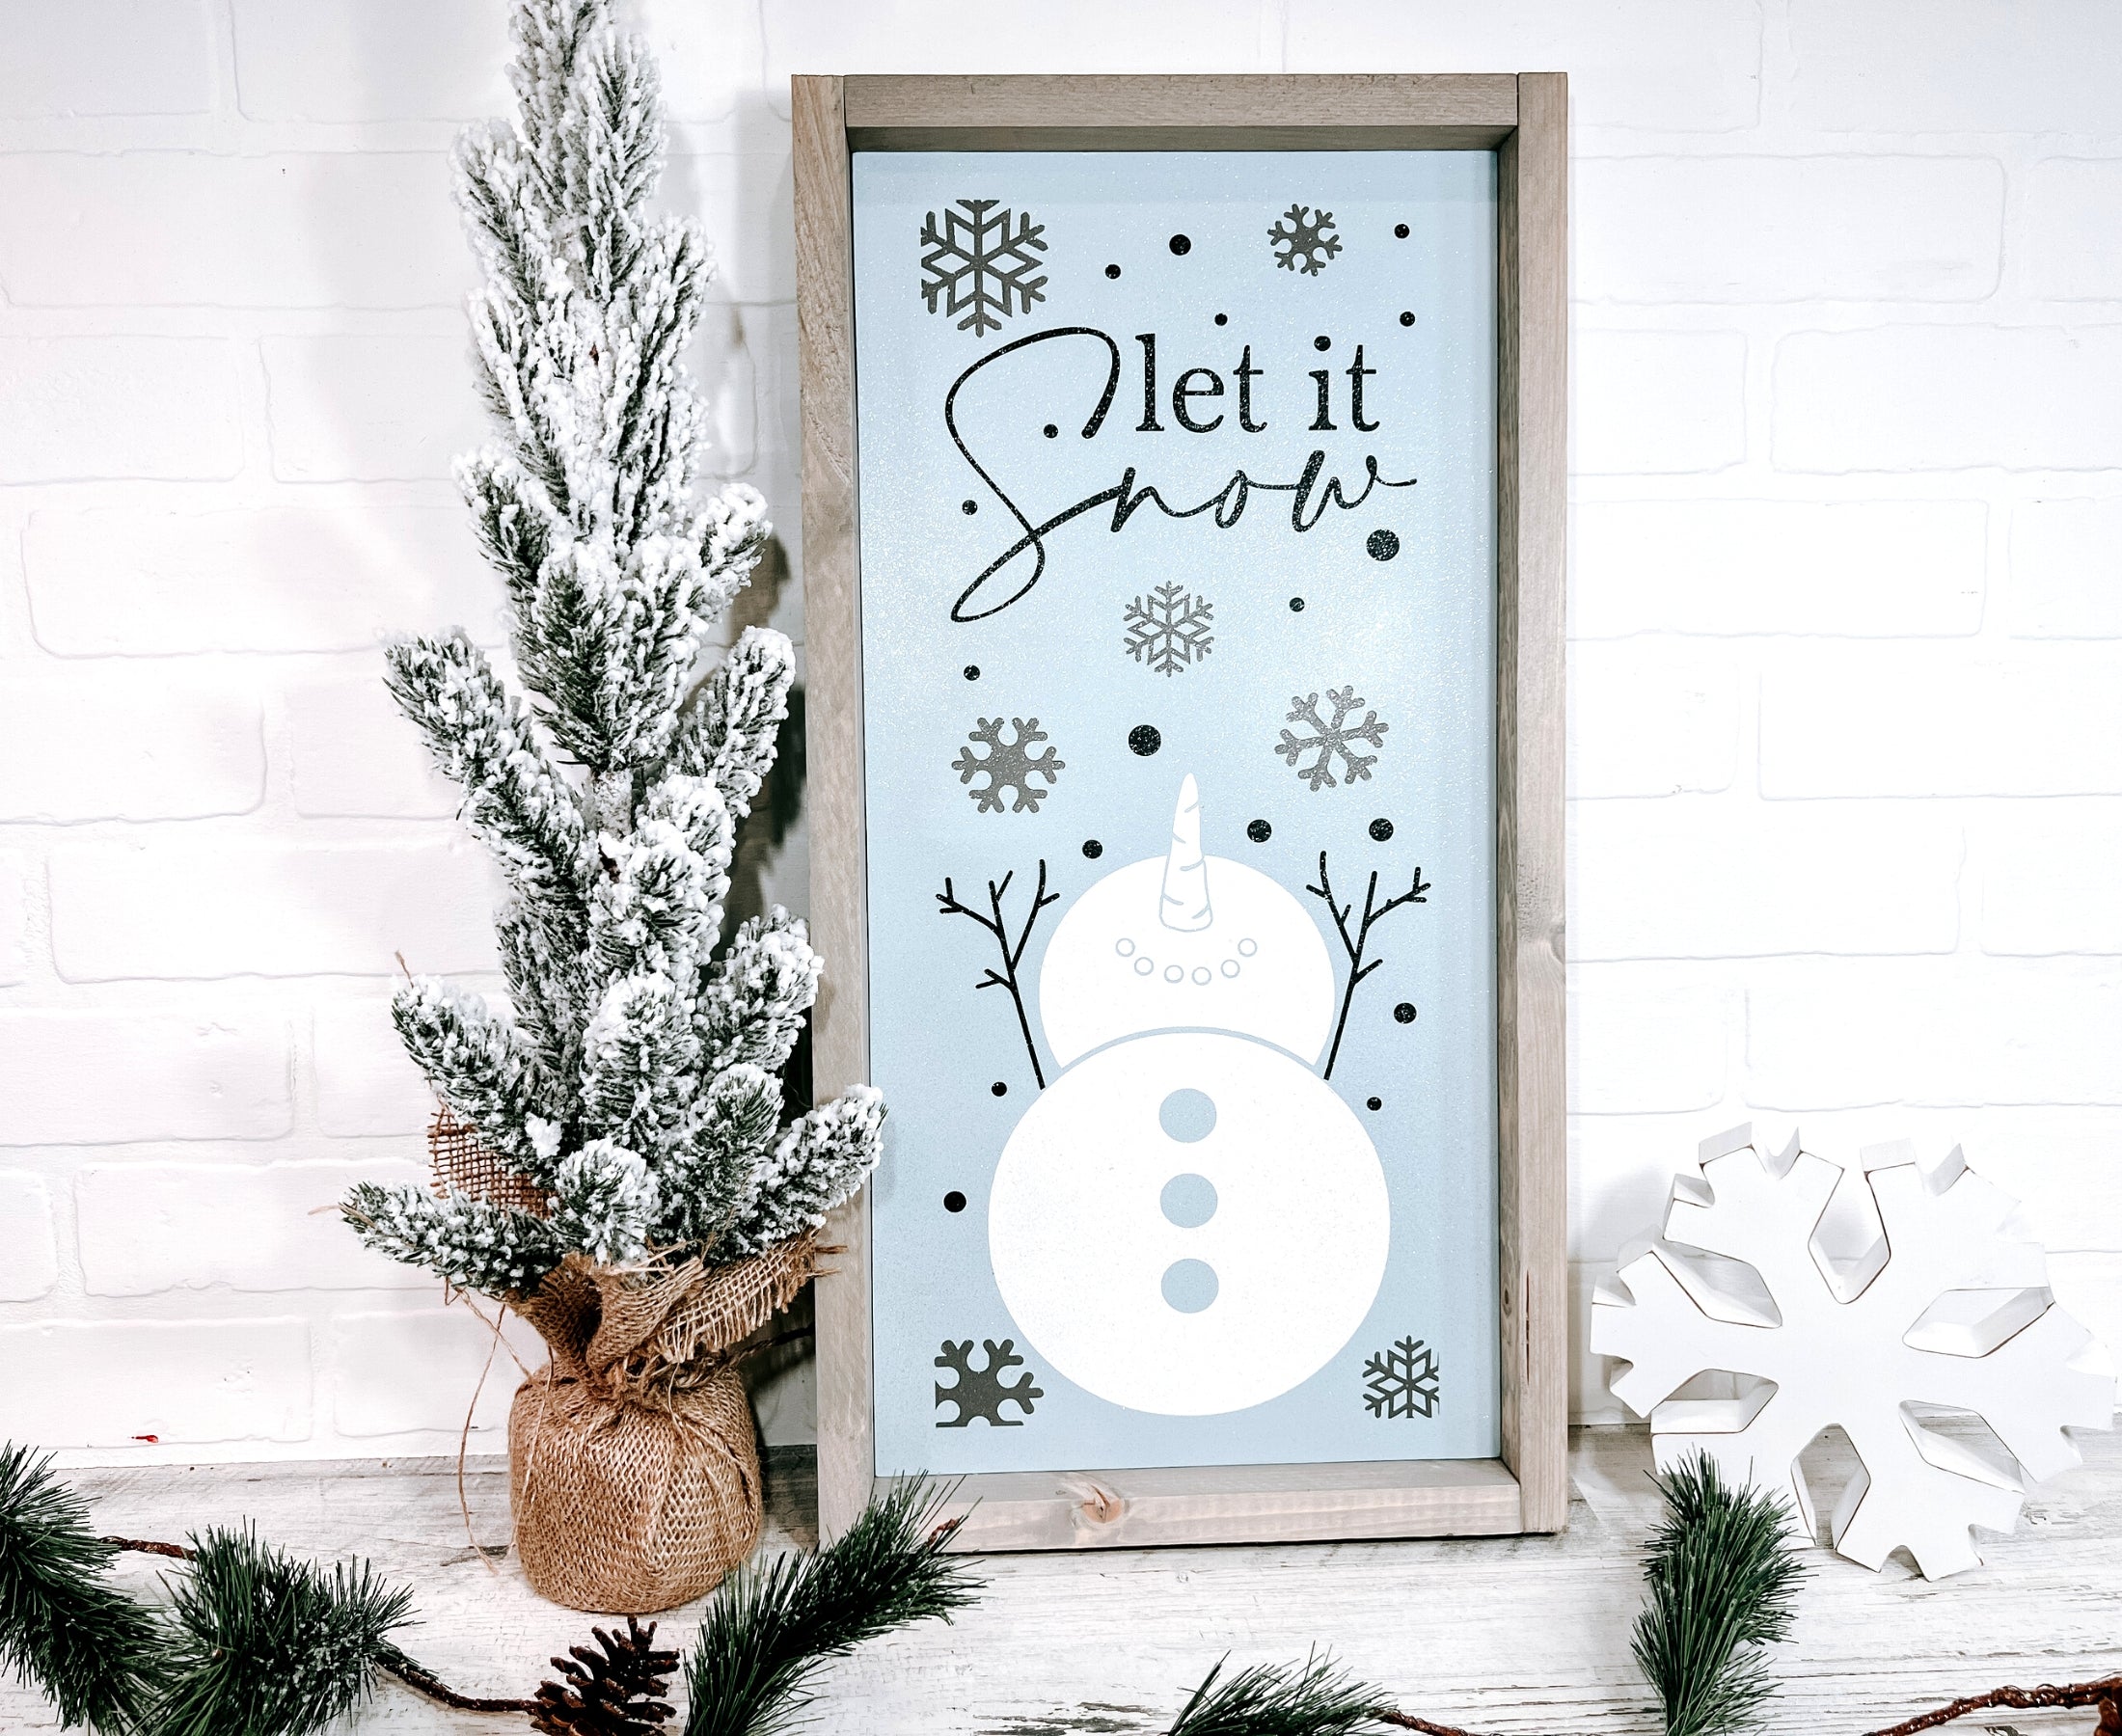 WOOD KIT / Let It Snow Snowman